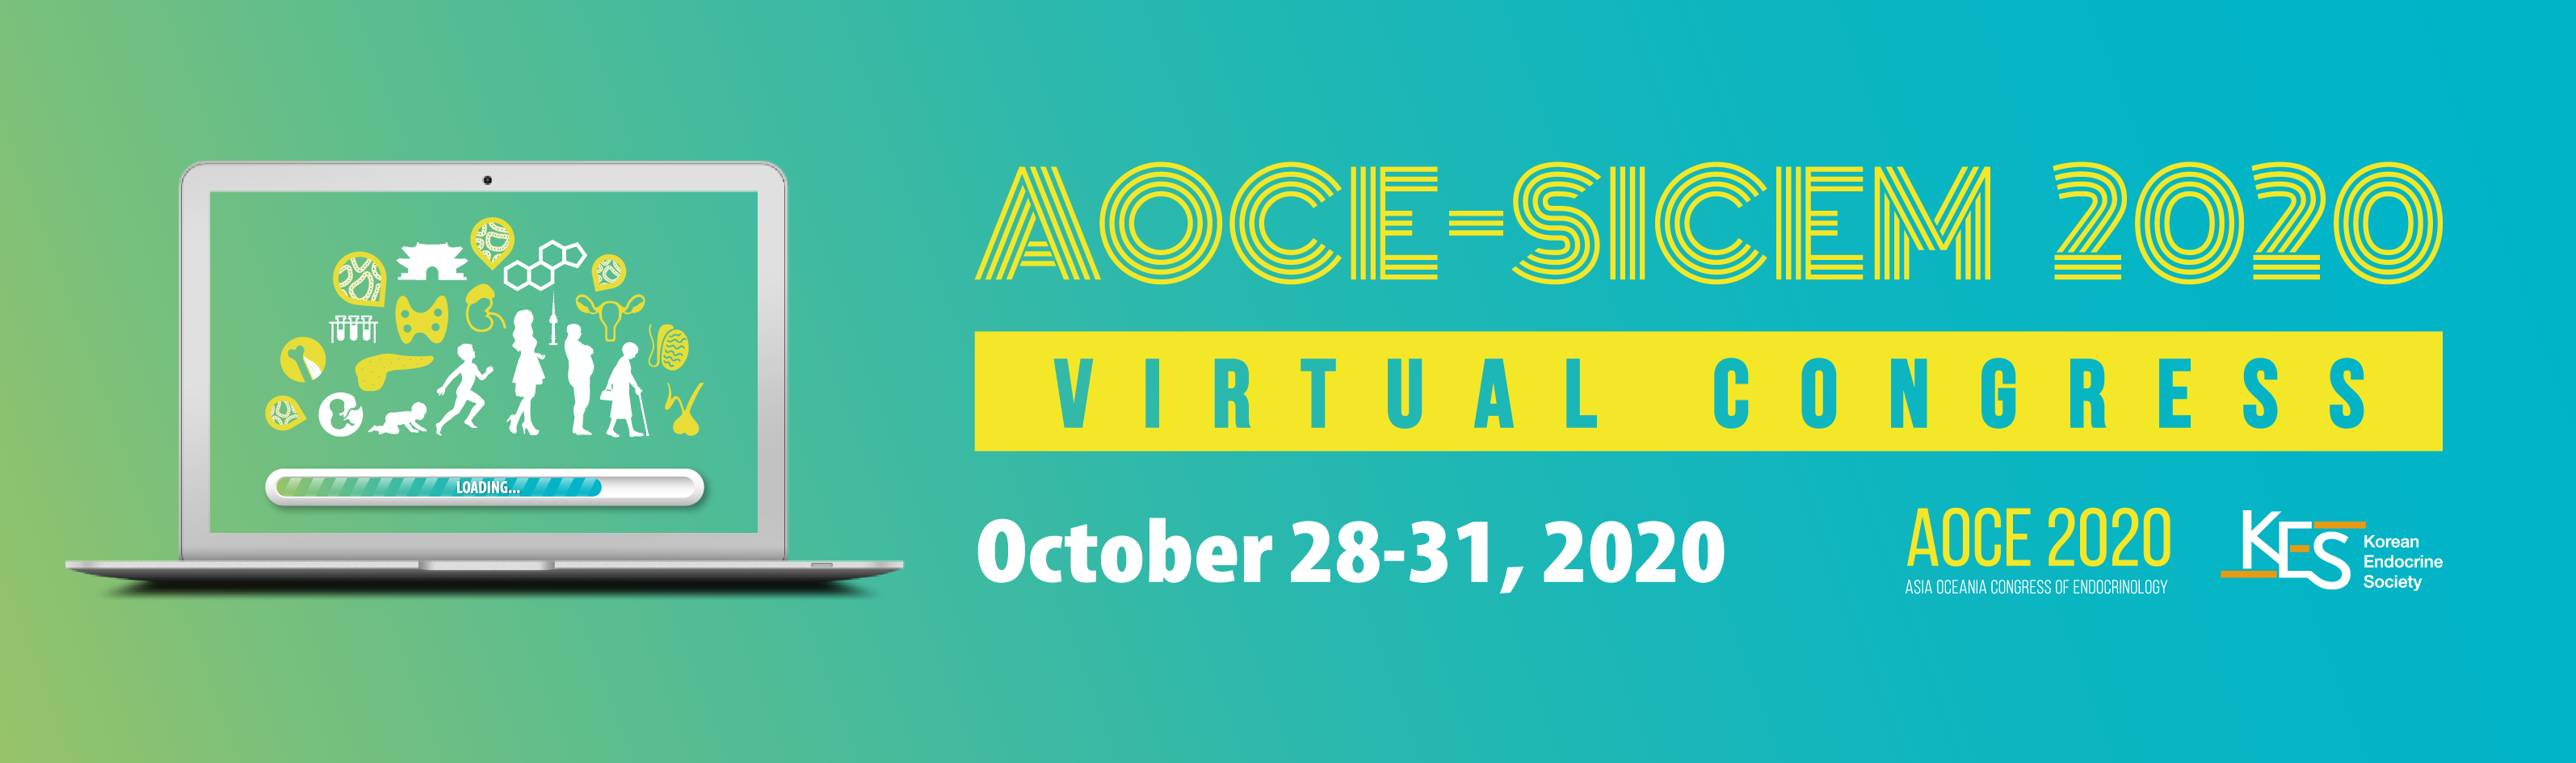 AOCE-SICEM2020_Virtual Congress_Banner.png.png